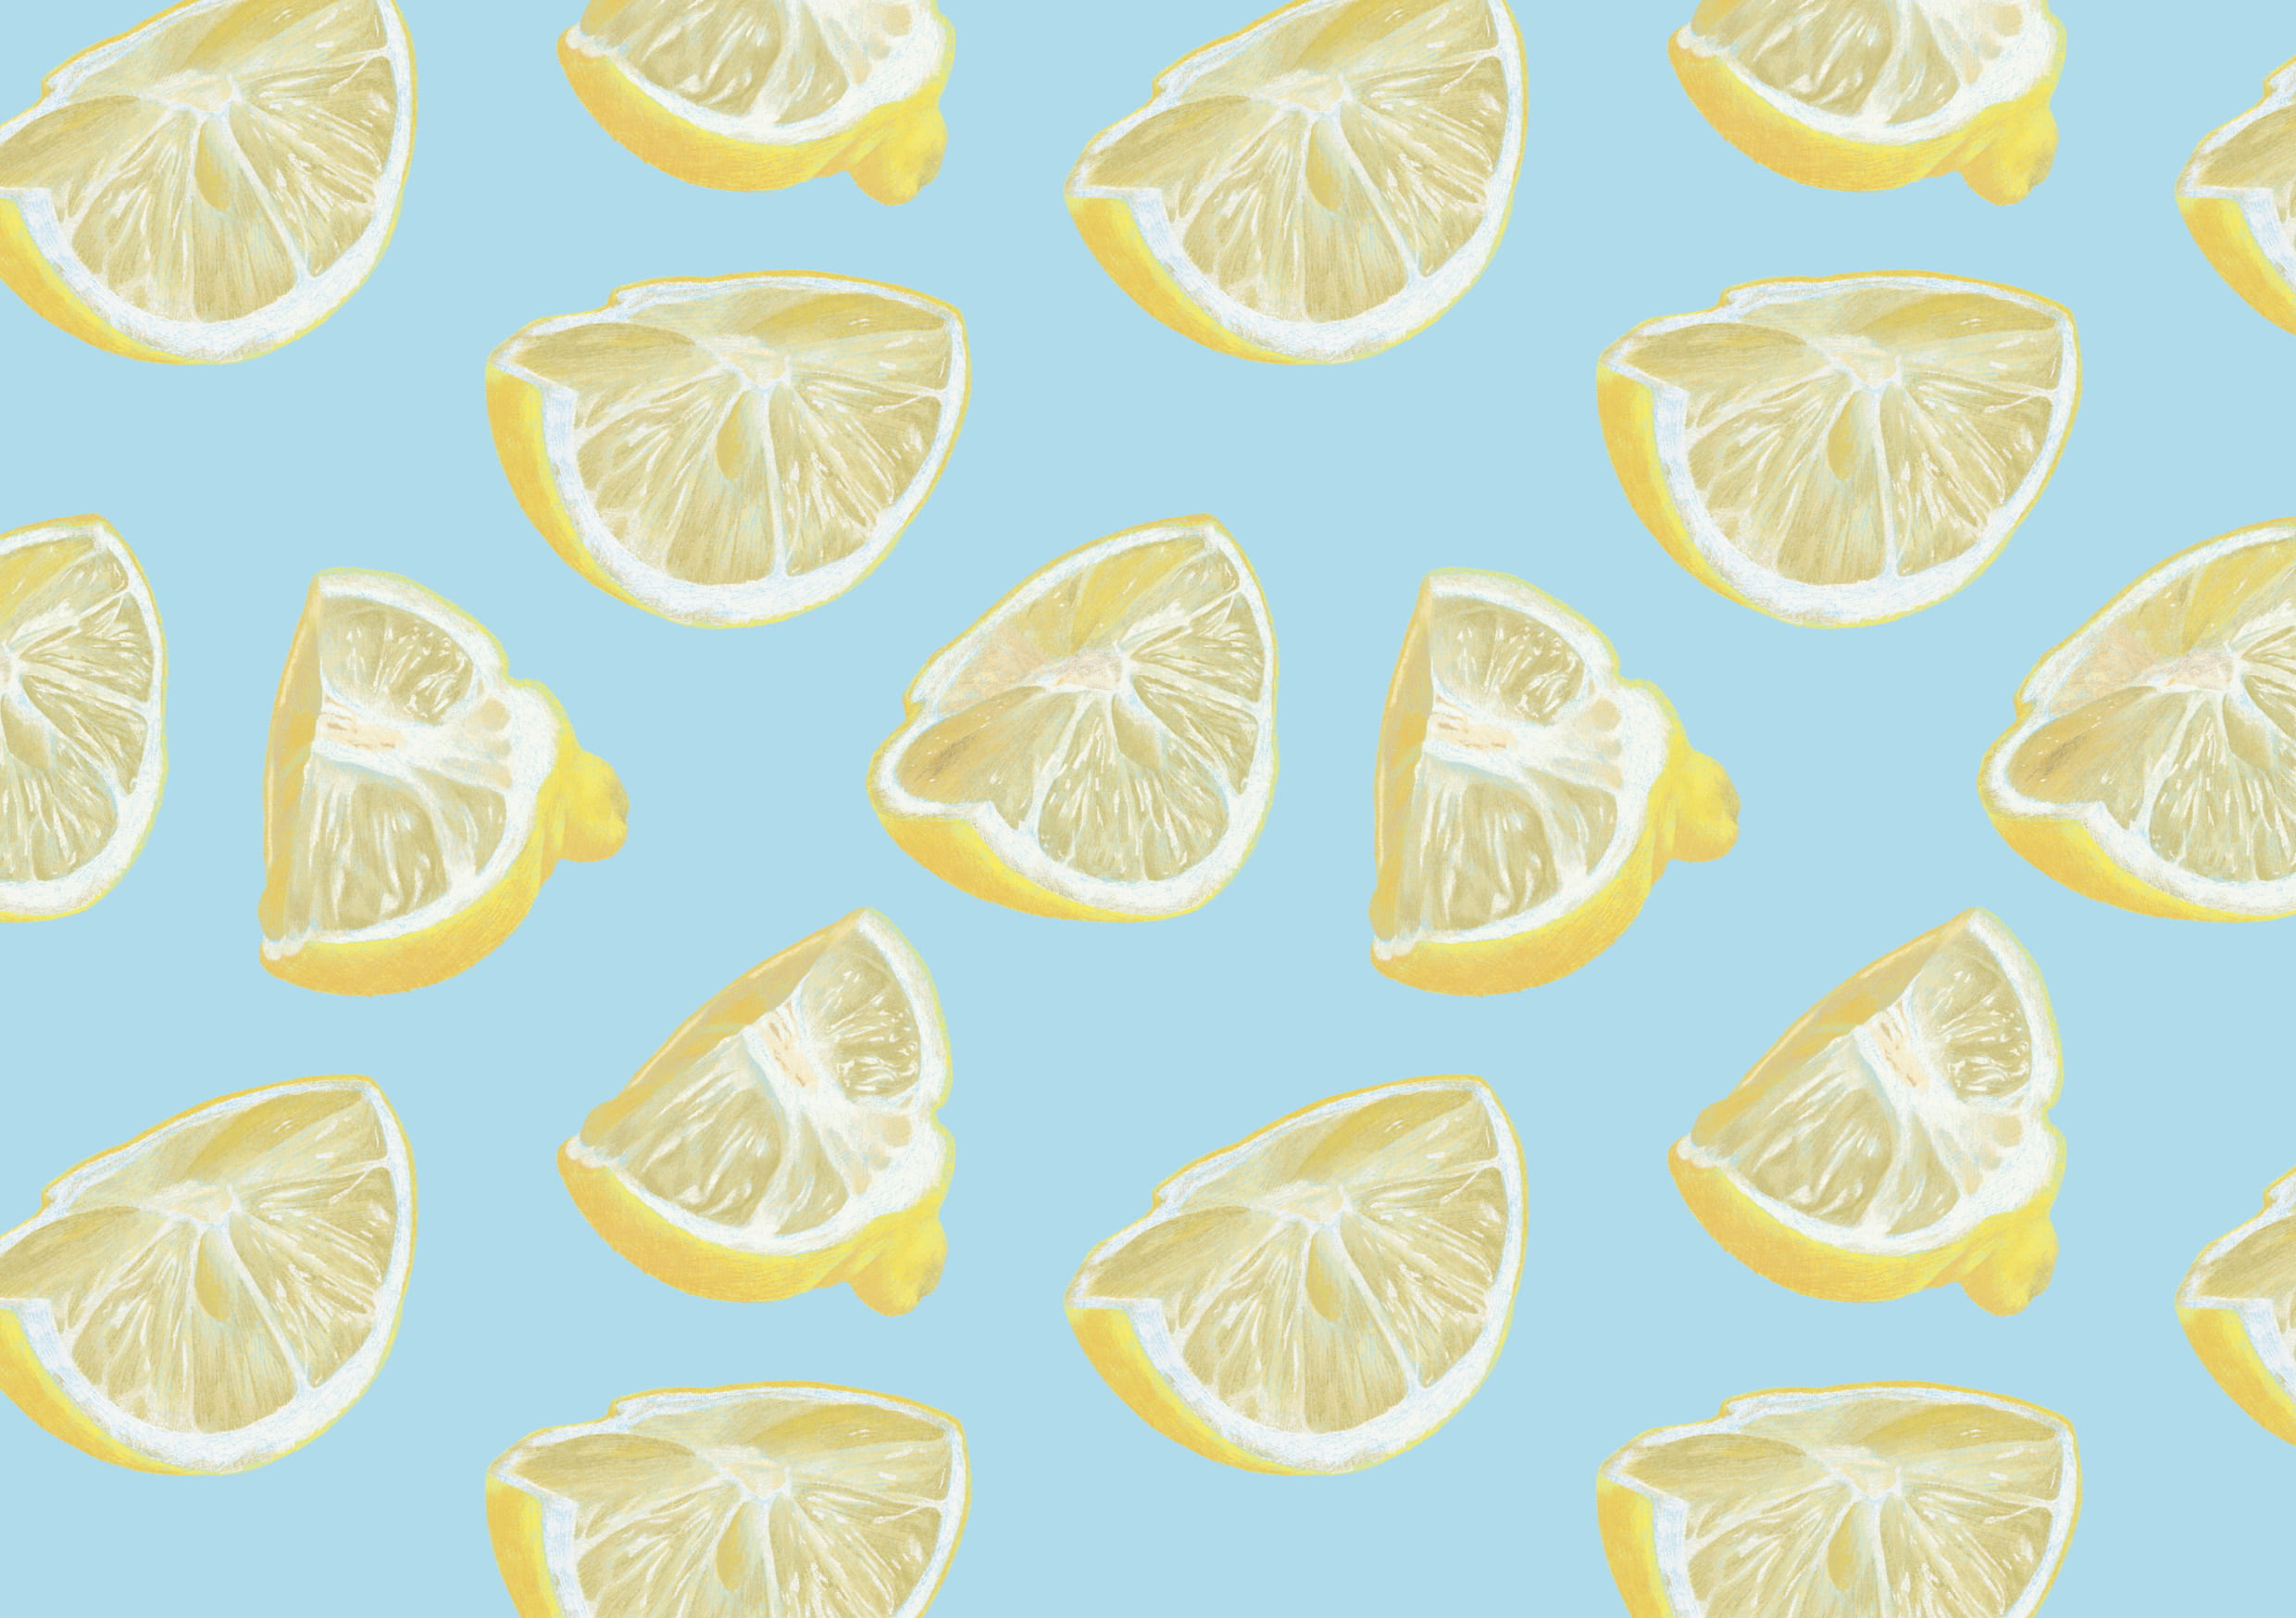 Illustration. A pattern of lemons, against a blue background.